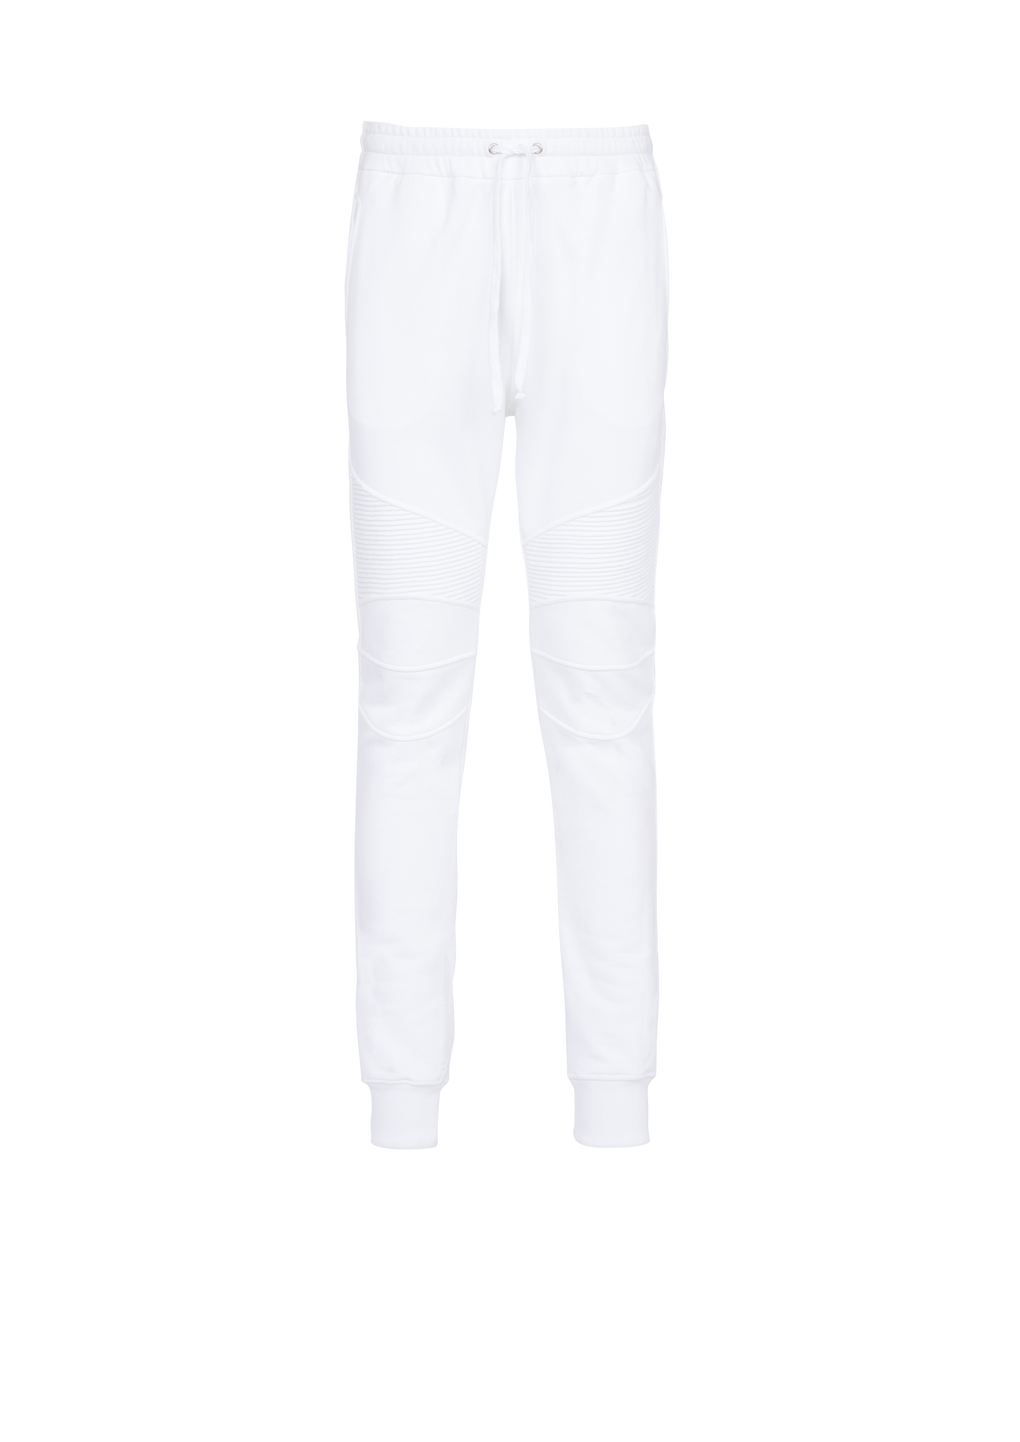 Cotton sweatpants with Balmain Paris logo, white, hi-res